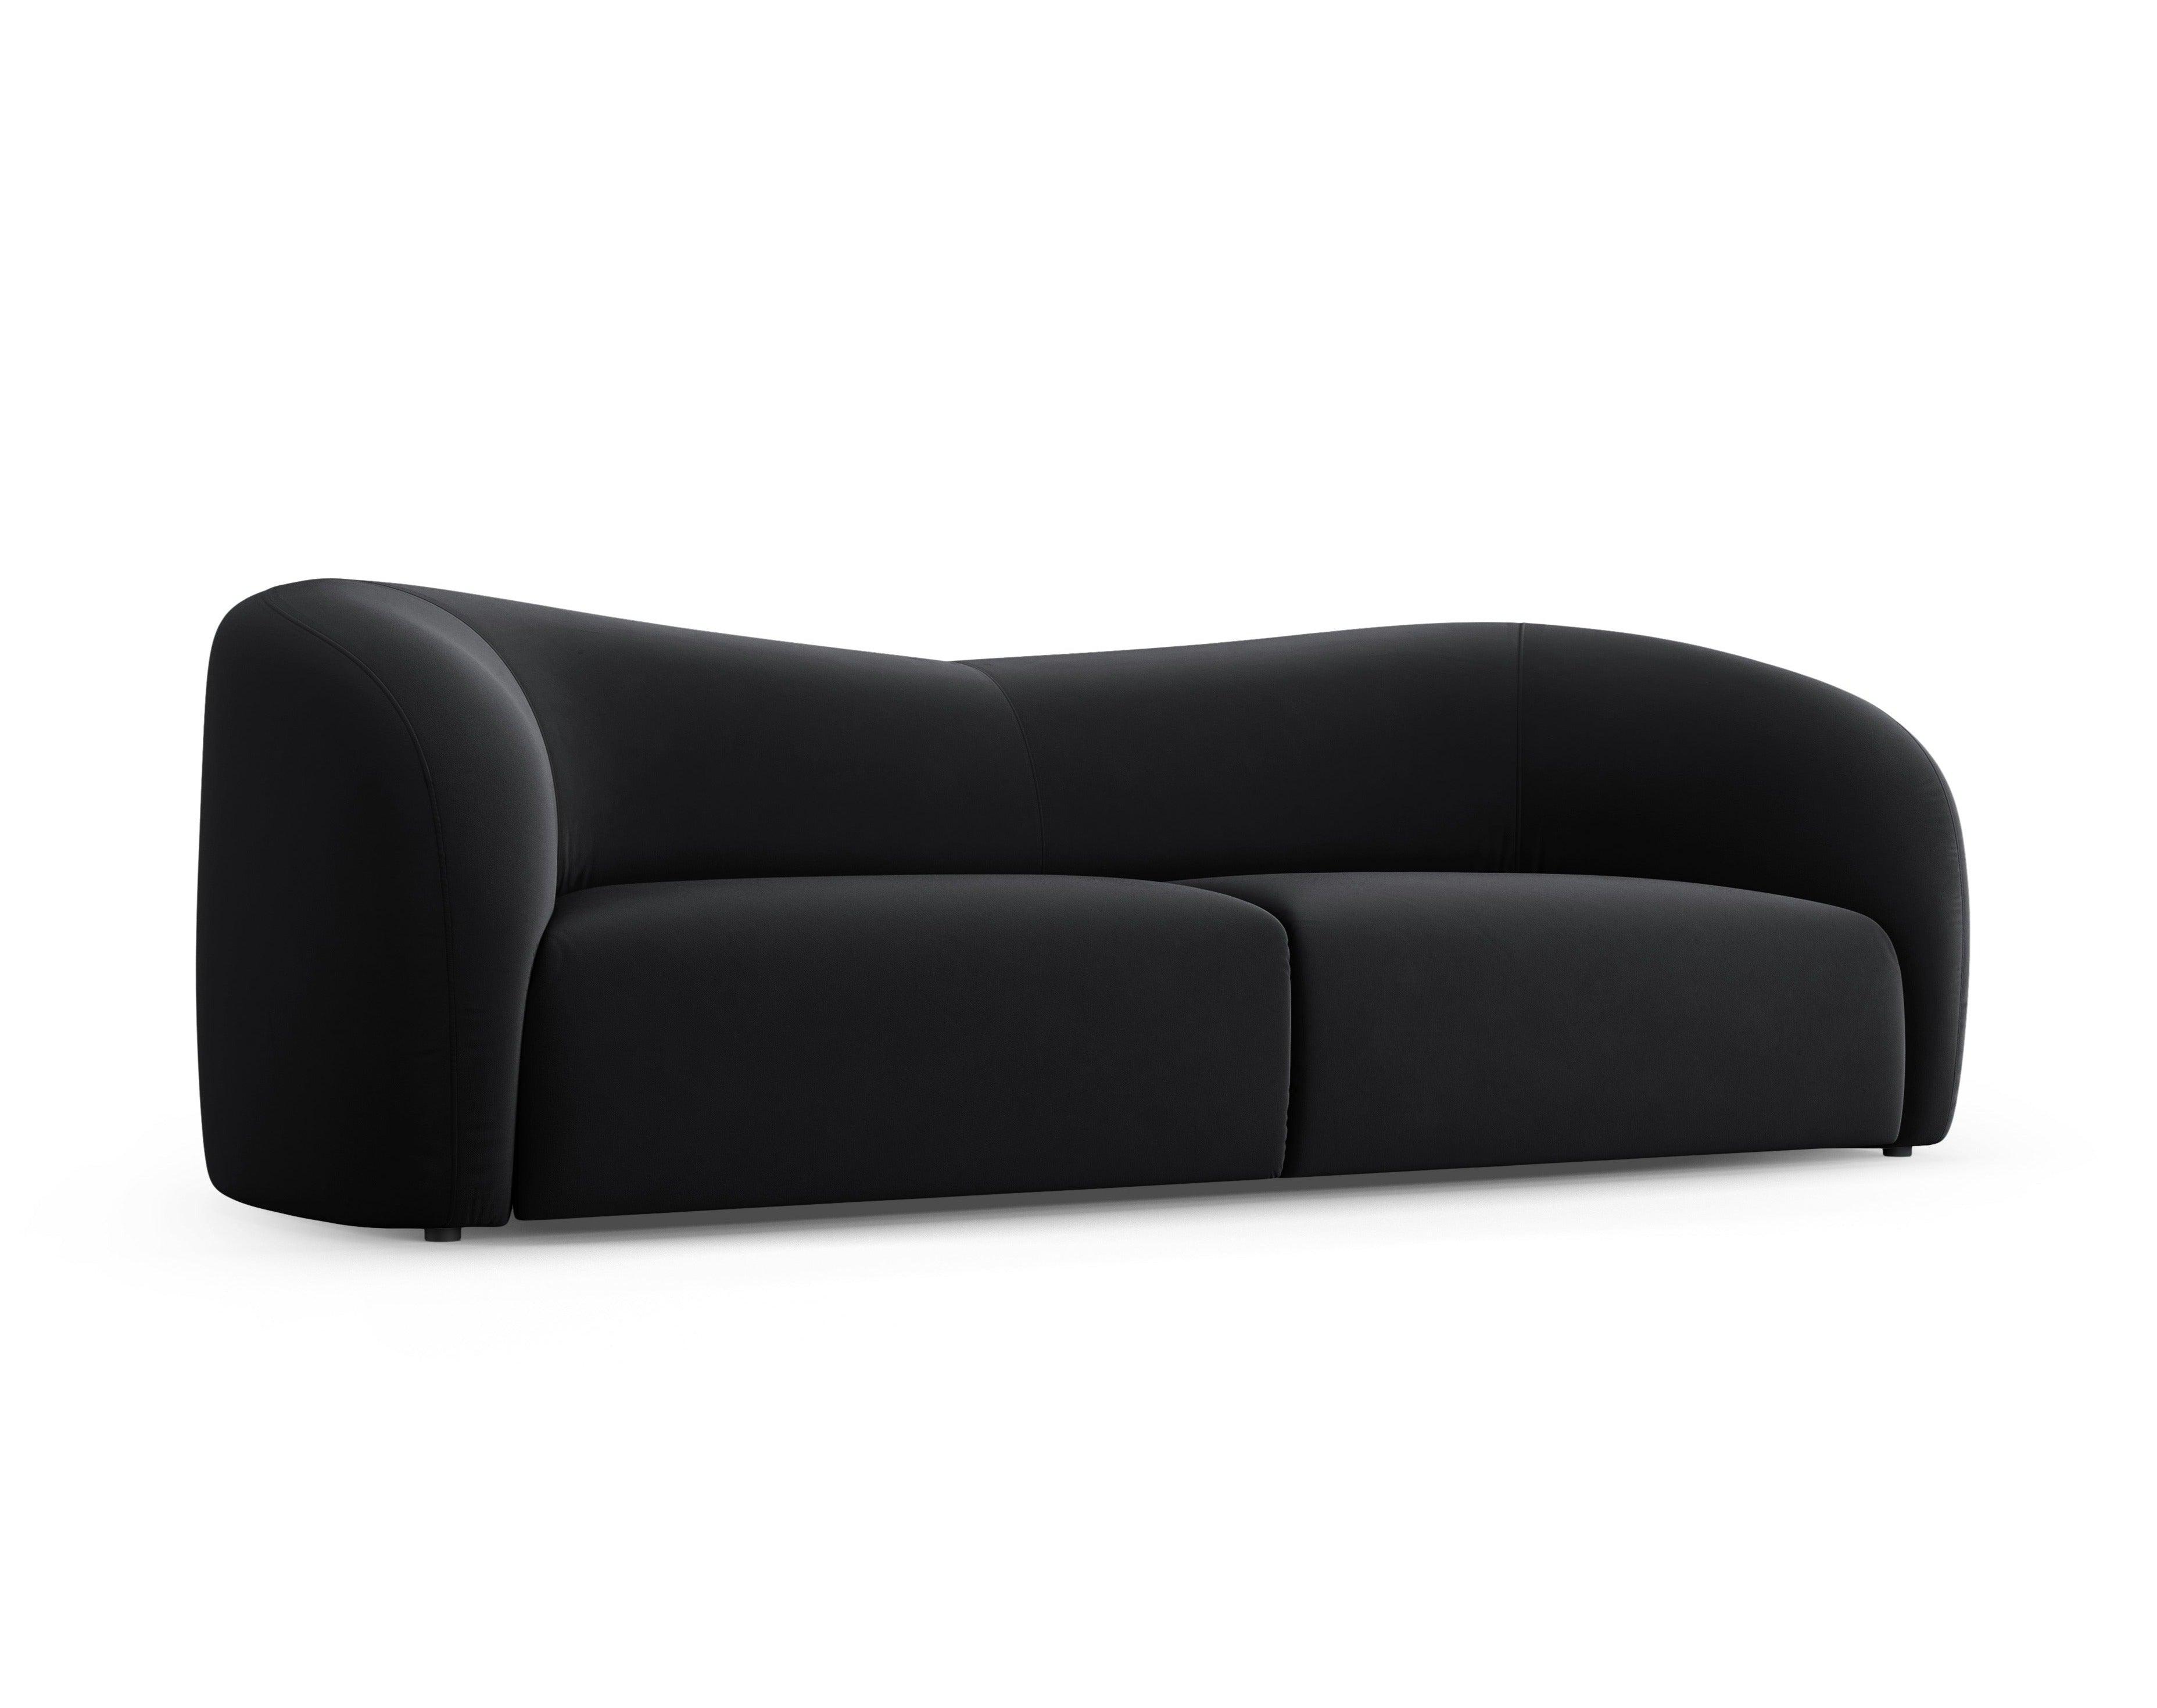 Velvet Sofa, "Santi", 3 Seats, Black, 237x90x75
Made in Europe Interieurs 86    Eye on Design